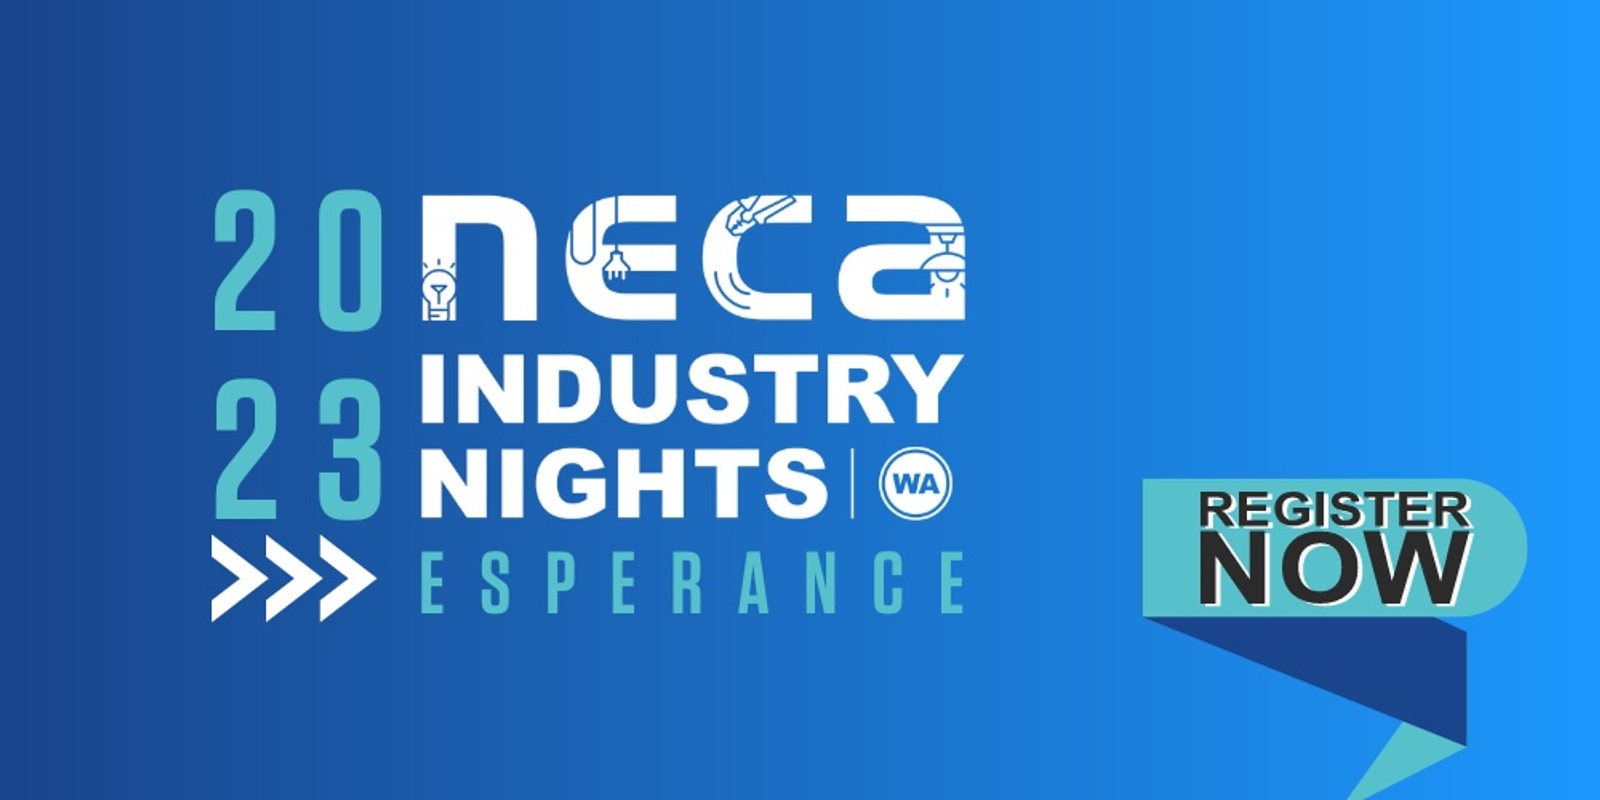 Banner image for 2023 NECA WA Industry Night - Esperance